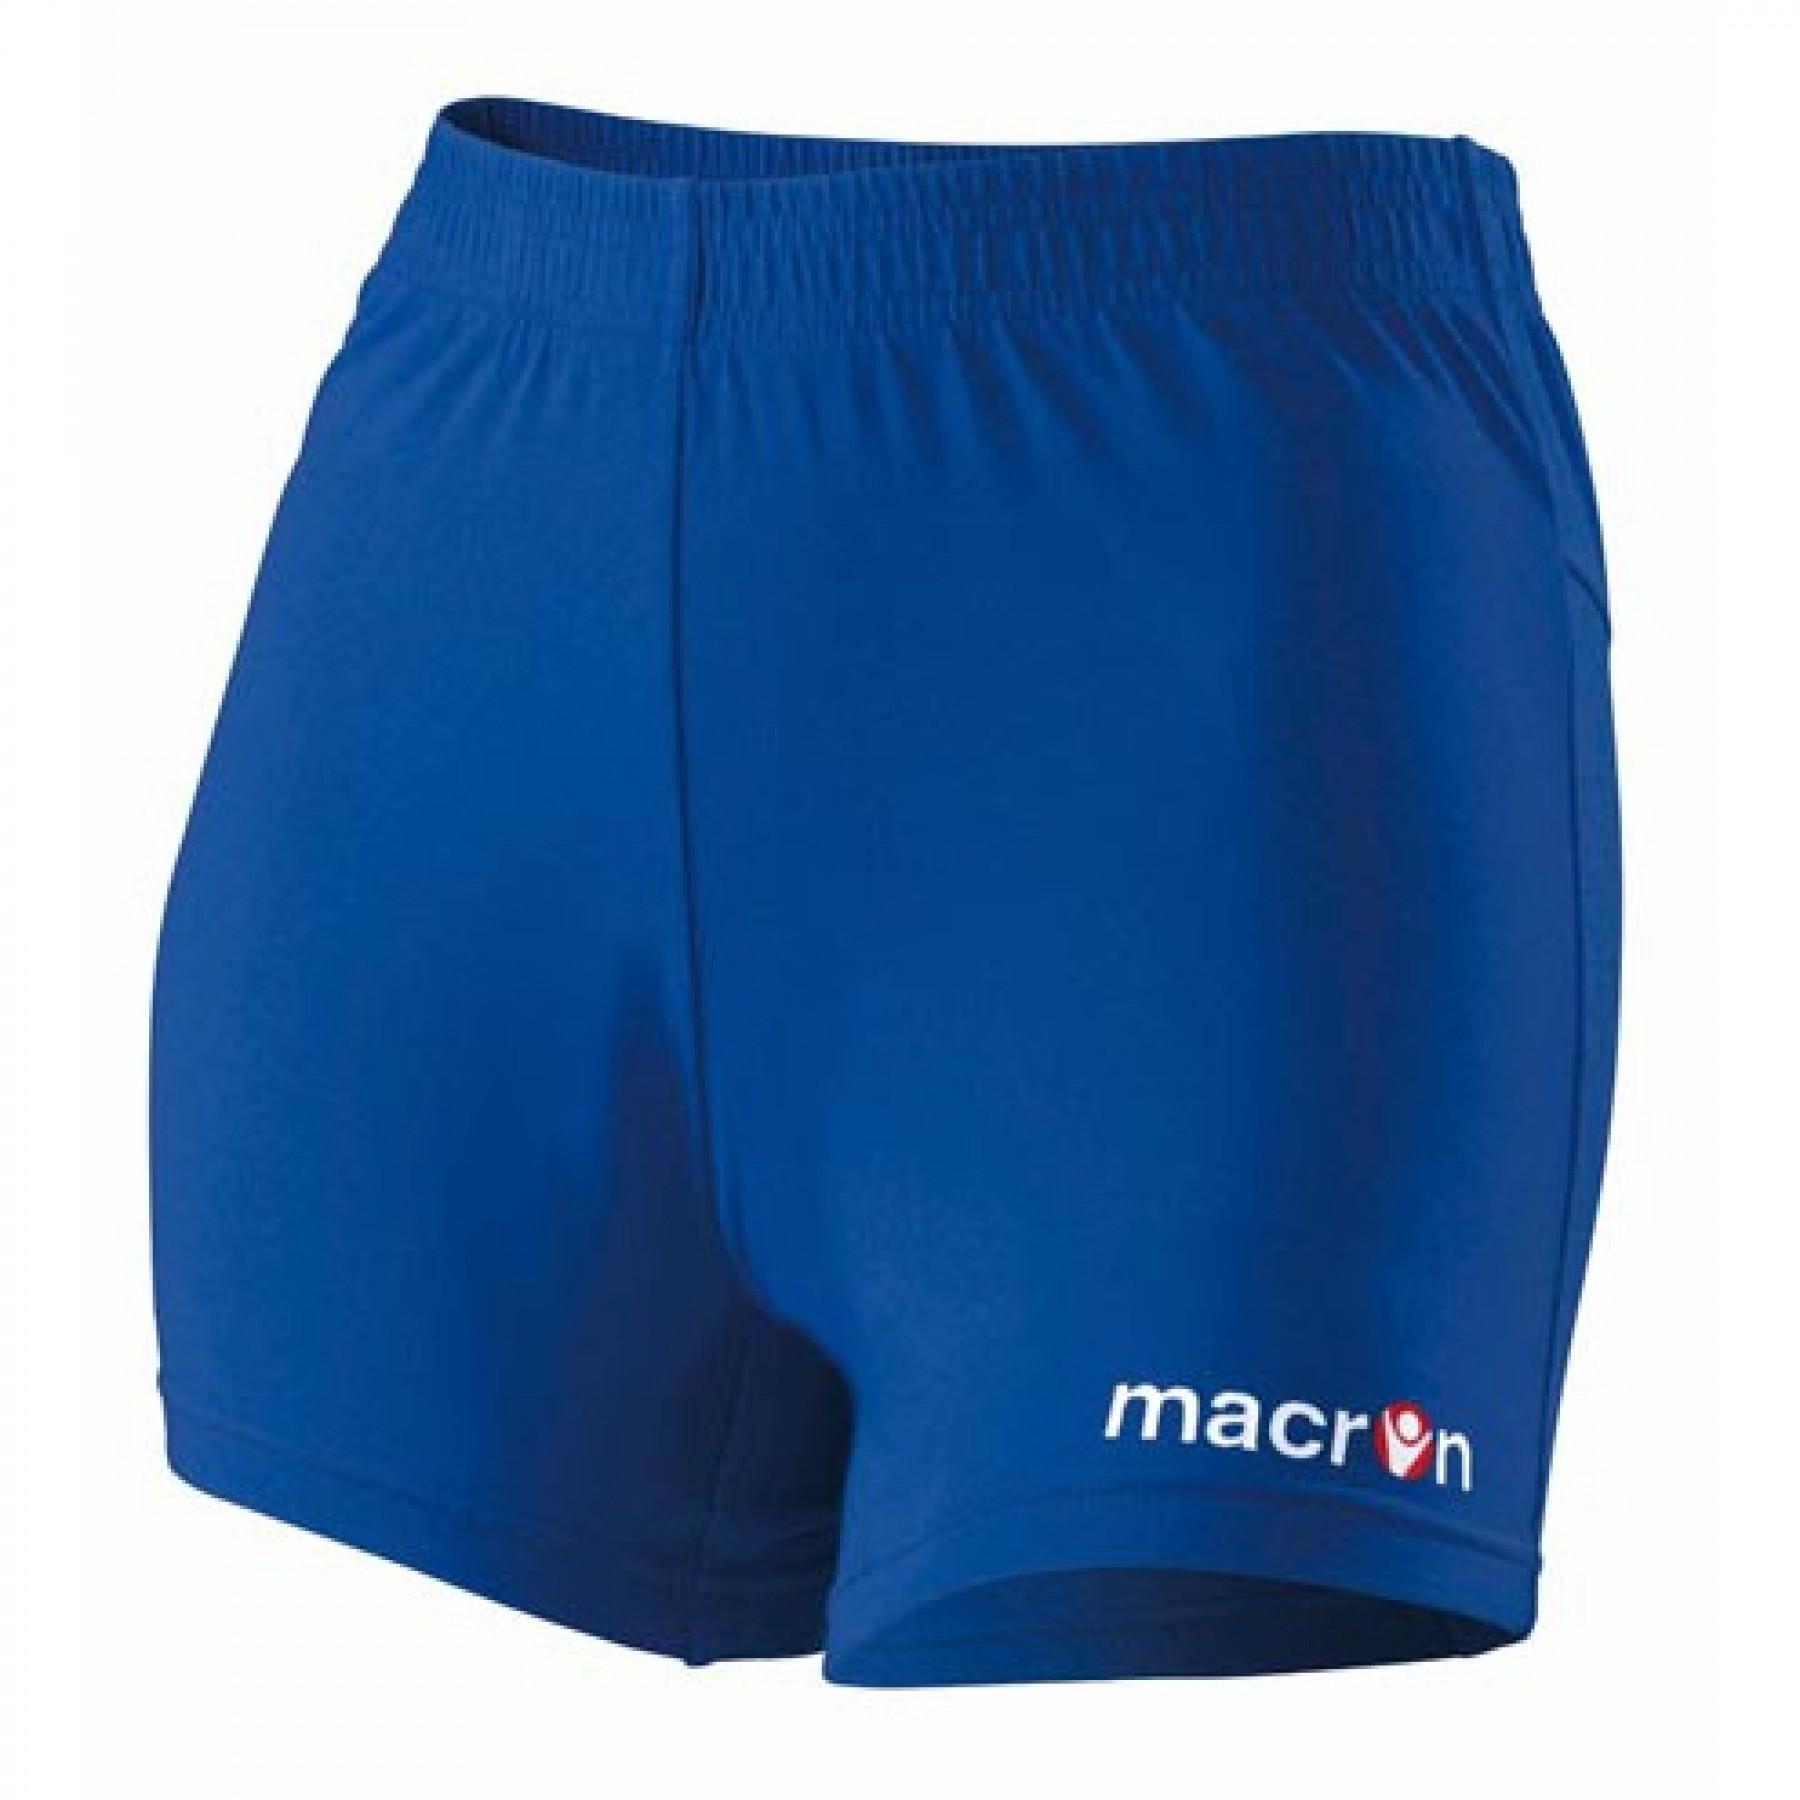 Pantalón corto Macron marina